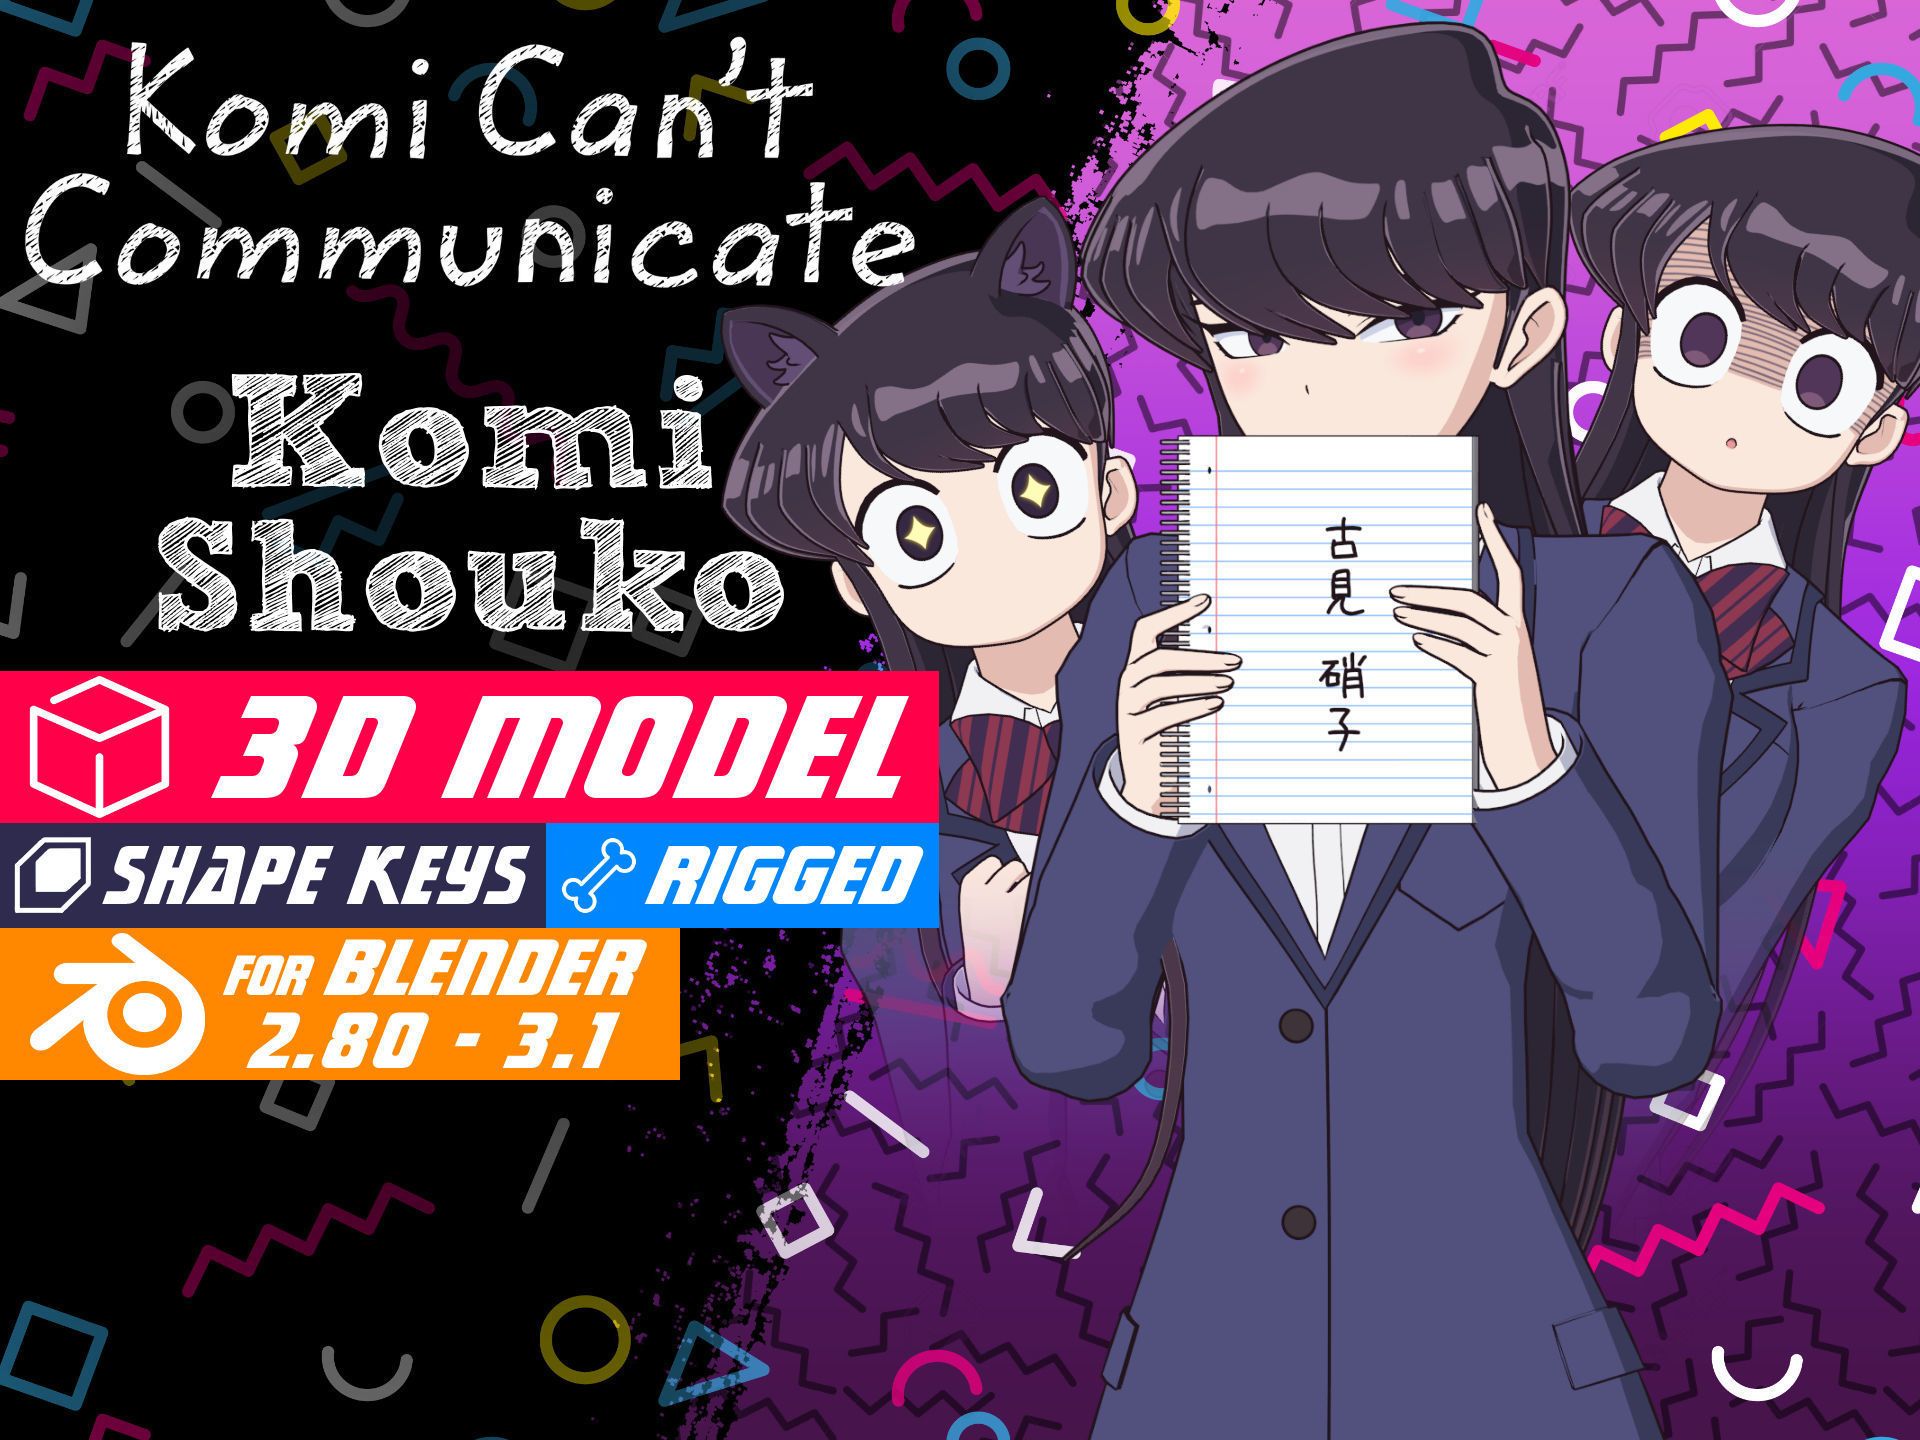 komi-shouko-komi-cant-communicate-3d-model-blender-3d-model-3863177b65.jpg